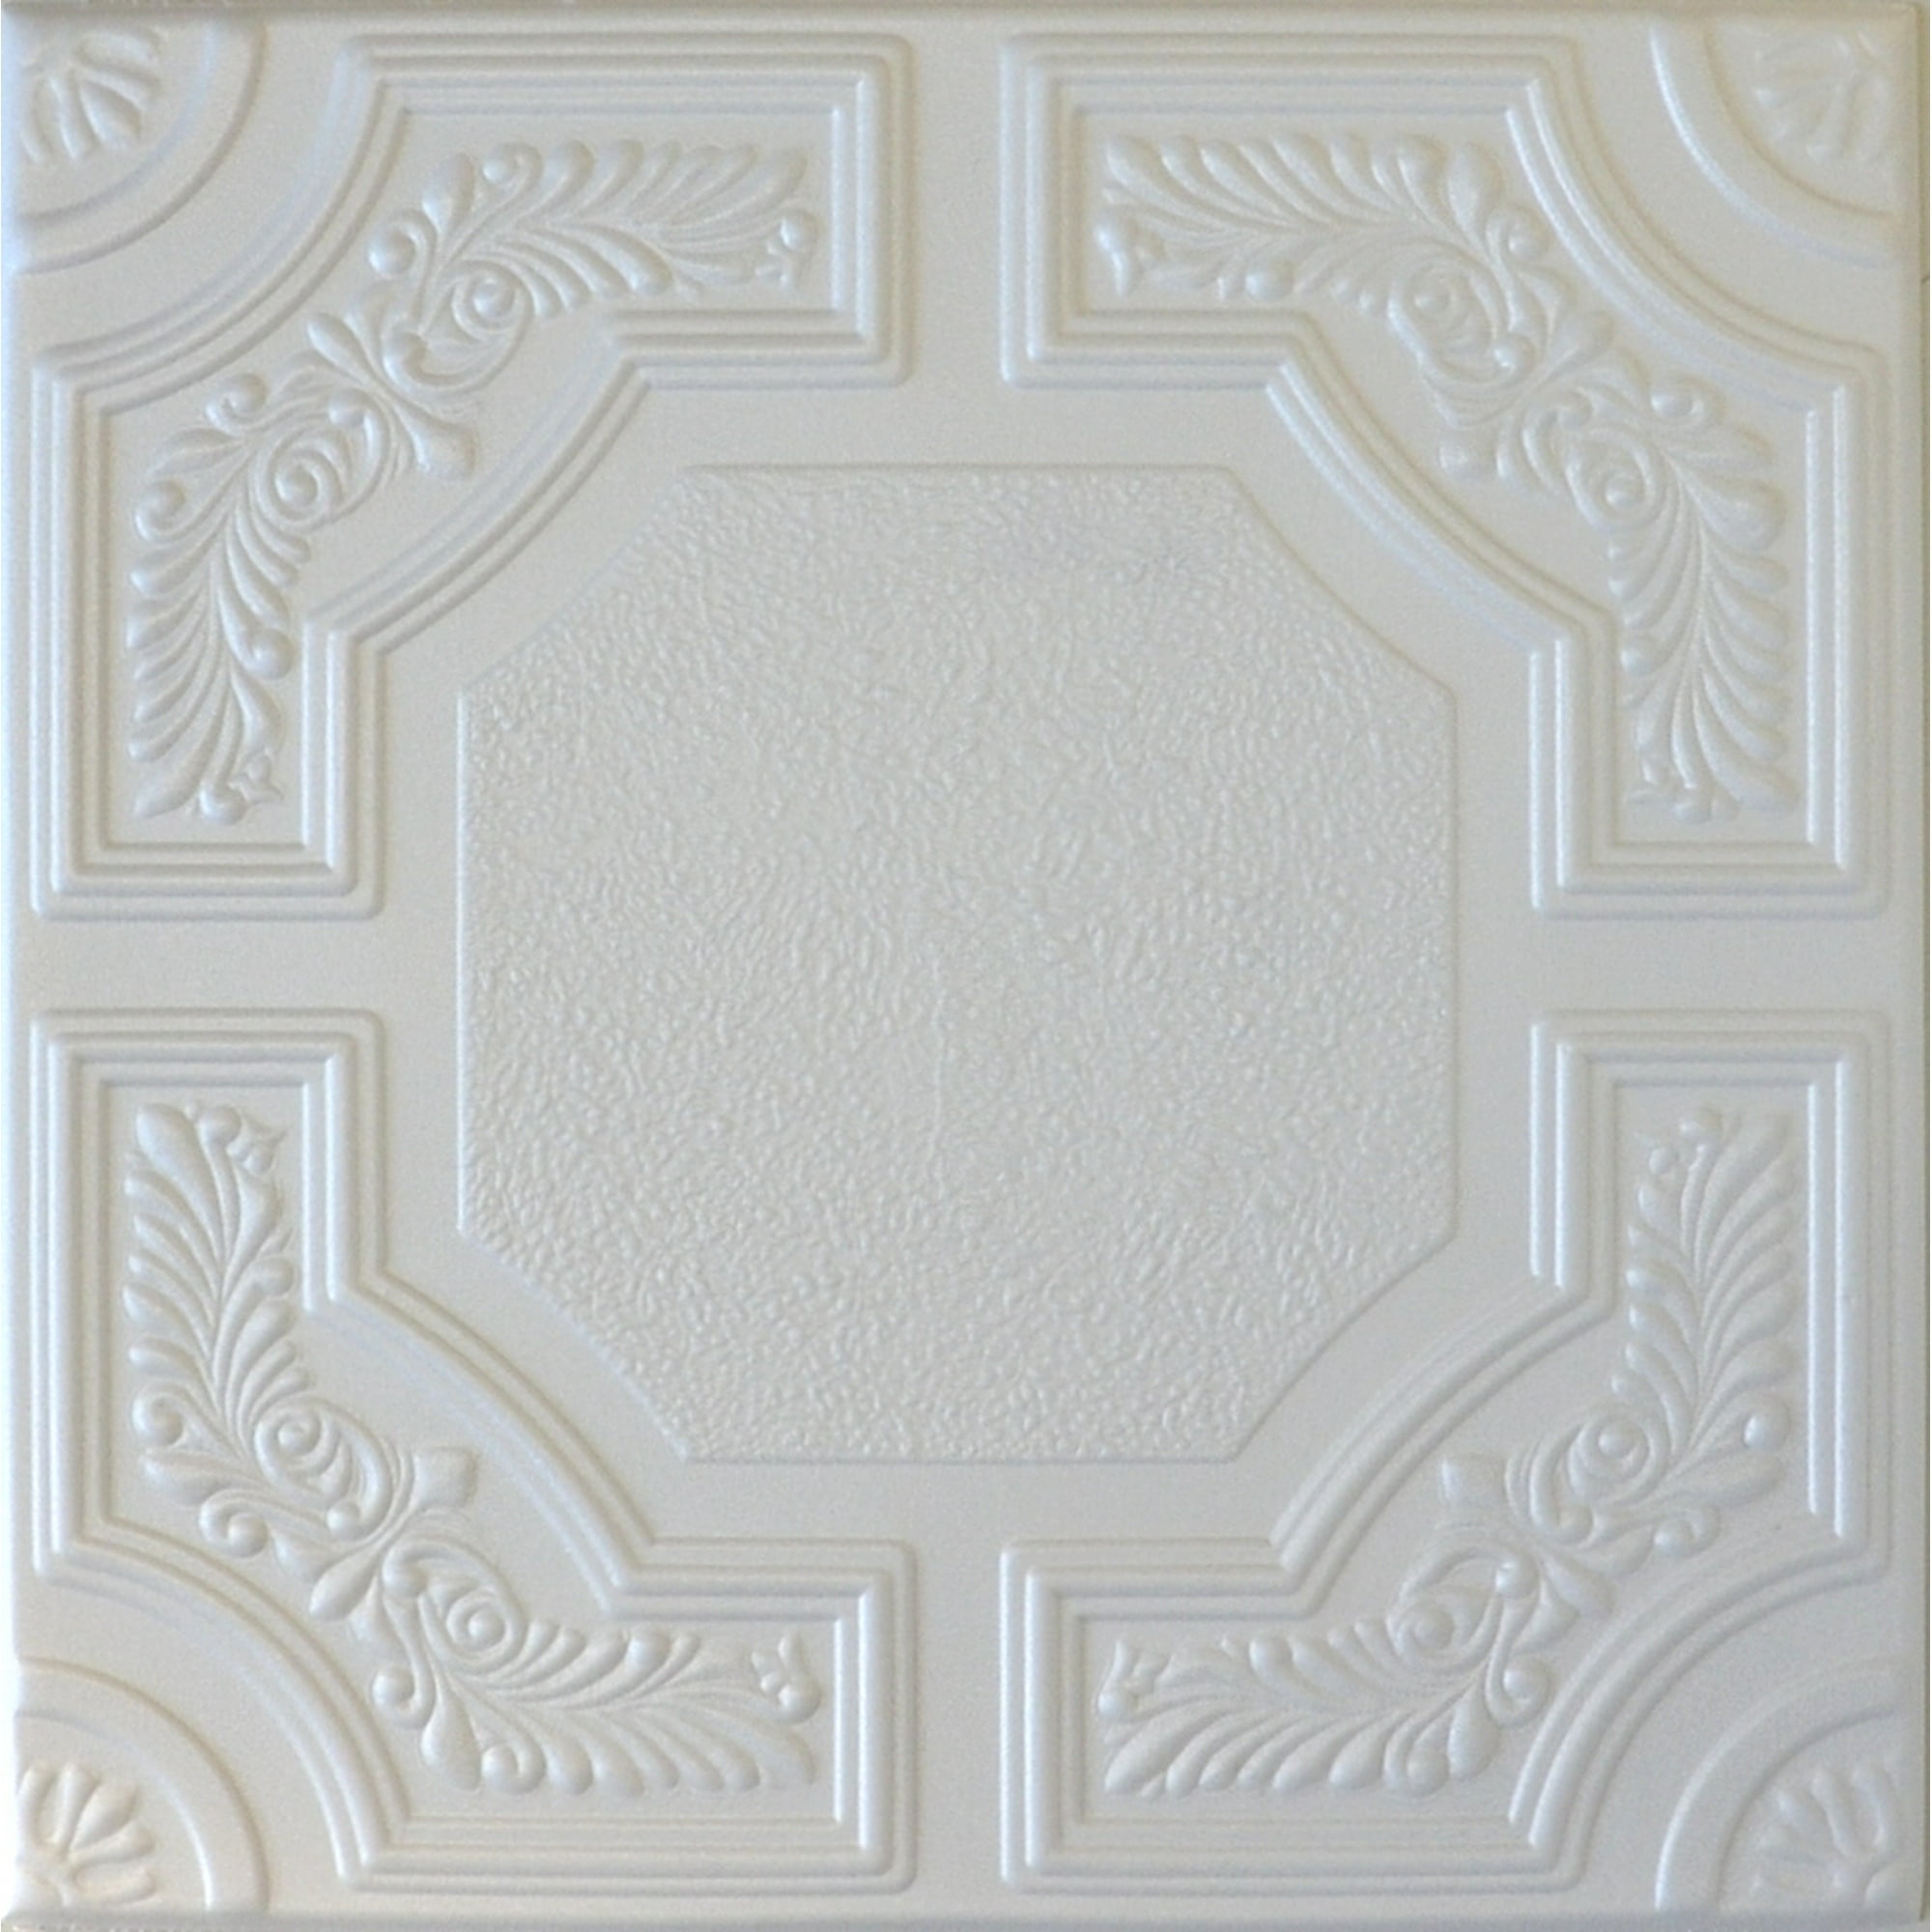 Styro Pro Polystyrene Decorative Ceiling Tiles 8 Pack